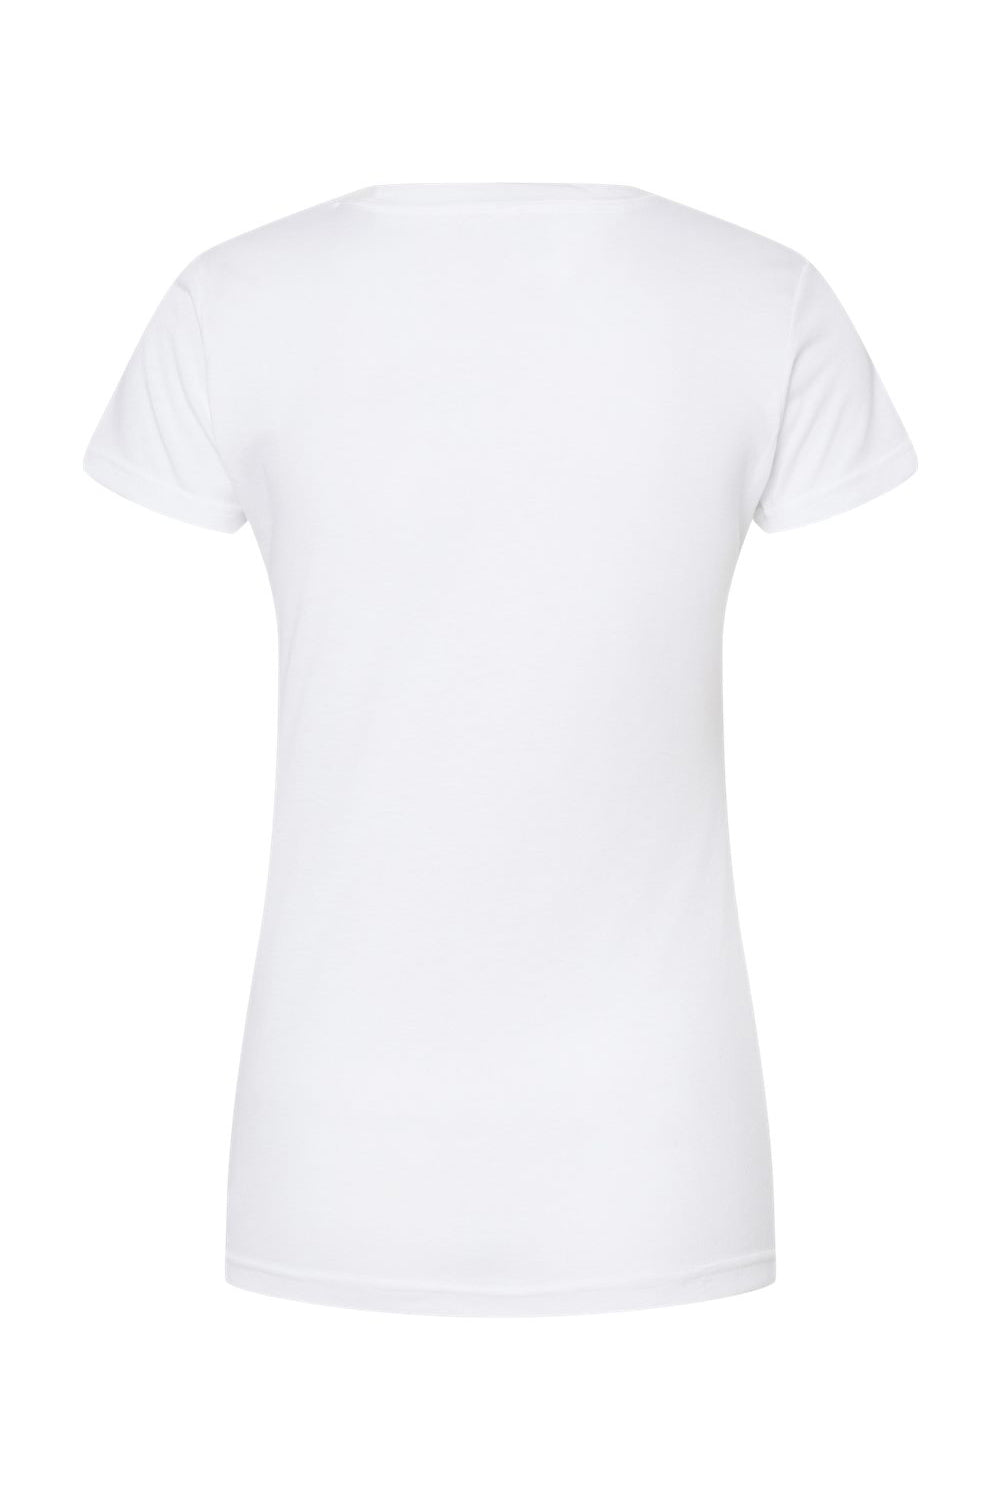 Tultex 240 Womens Poly-Rich Short Sleeve Crewneck T-Shirt White Flat Back